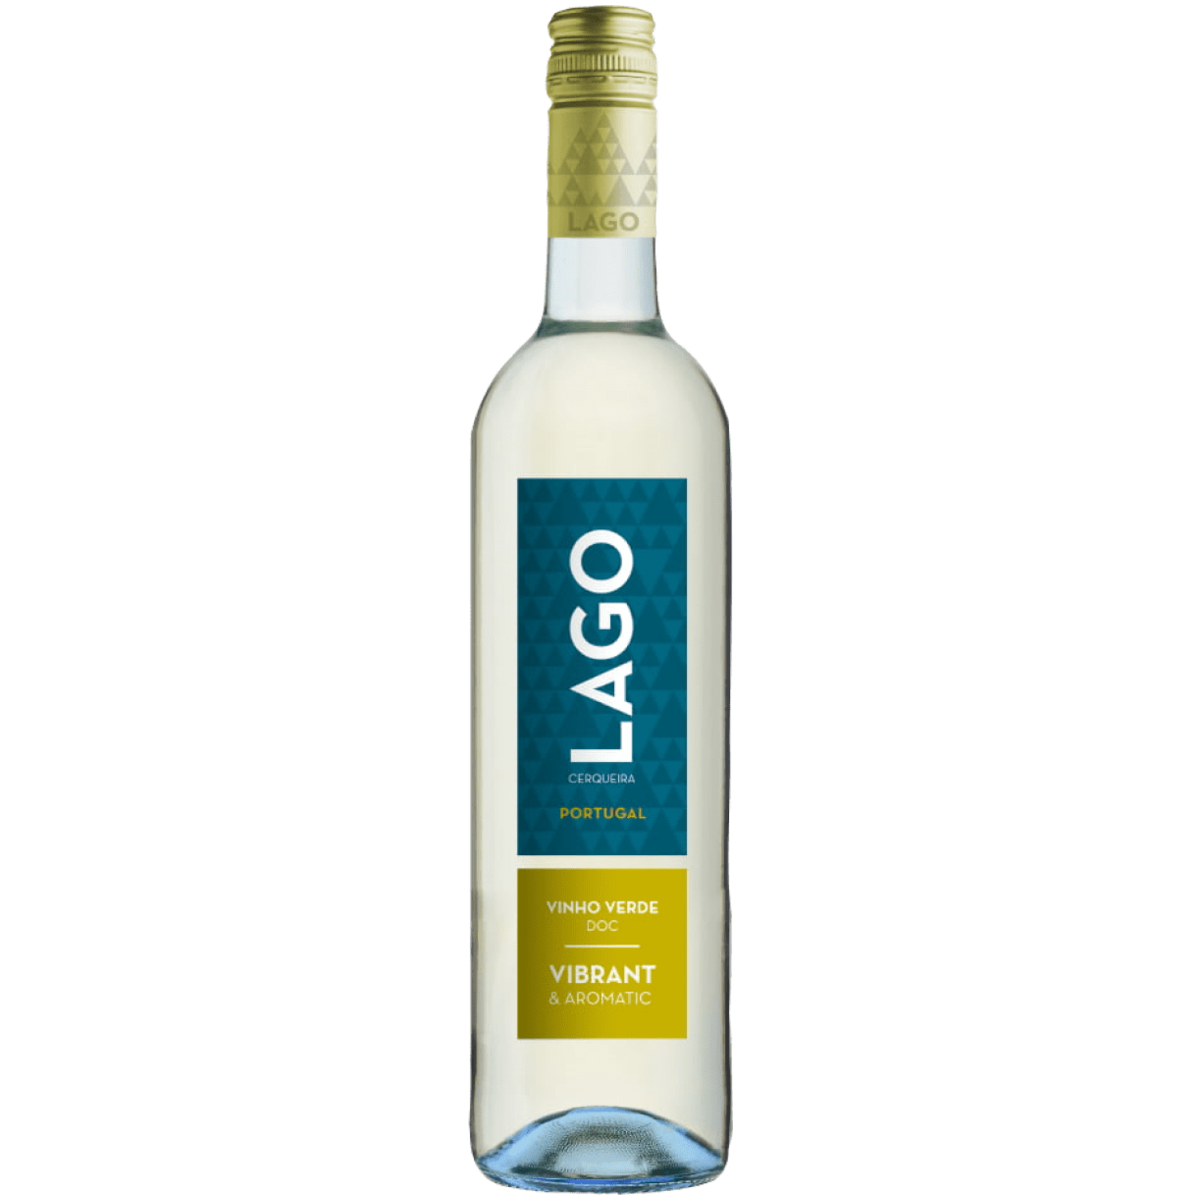 Вино полусухое doc. Лаго вино Португалия белое полусухое. Вино Lago Vinho Verde белое полусухое. Лаго бел. П/сух. 0,75 (Португалия) Виньо Верде. Вино Верде Лаго Португалия.